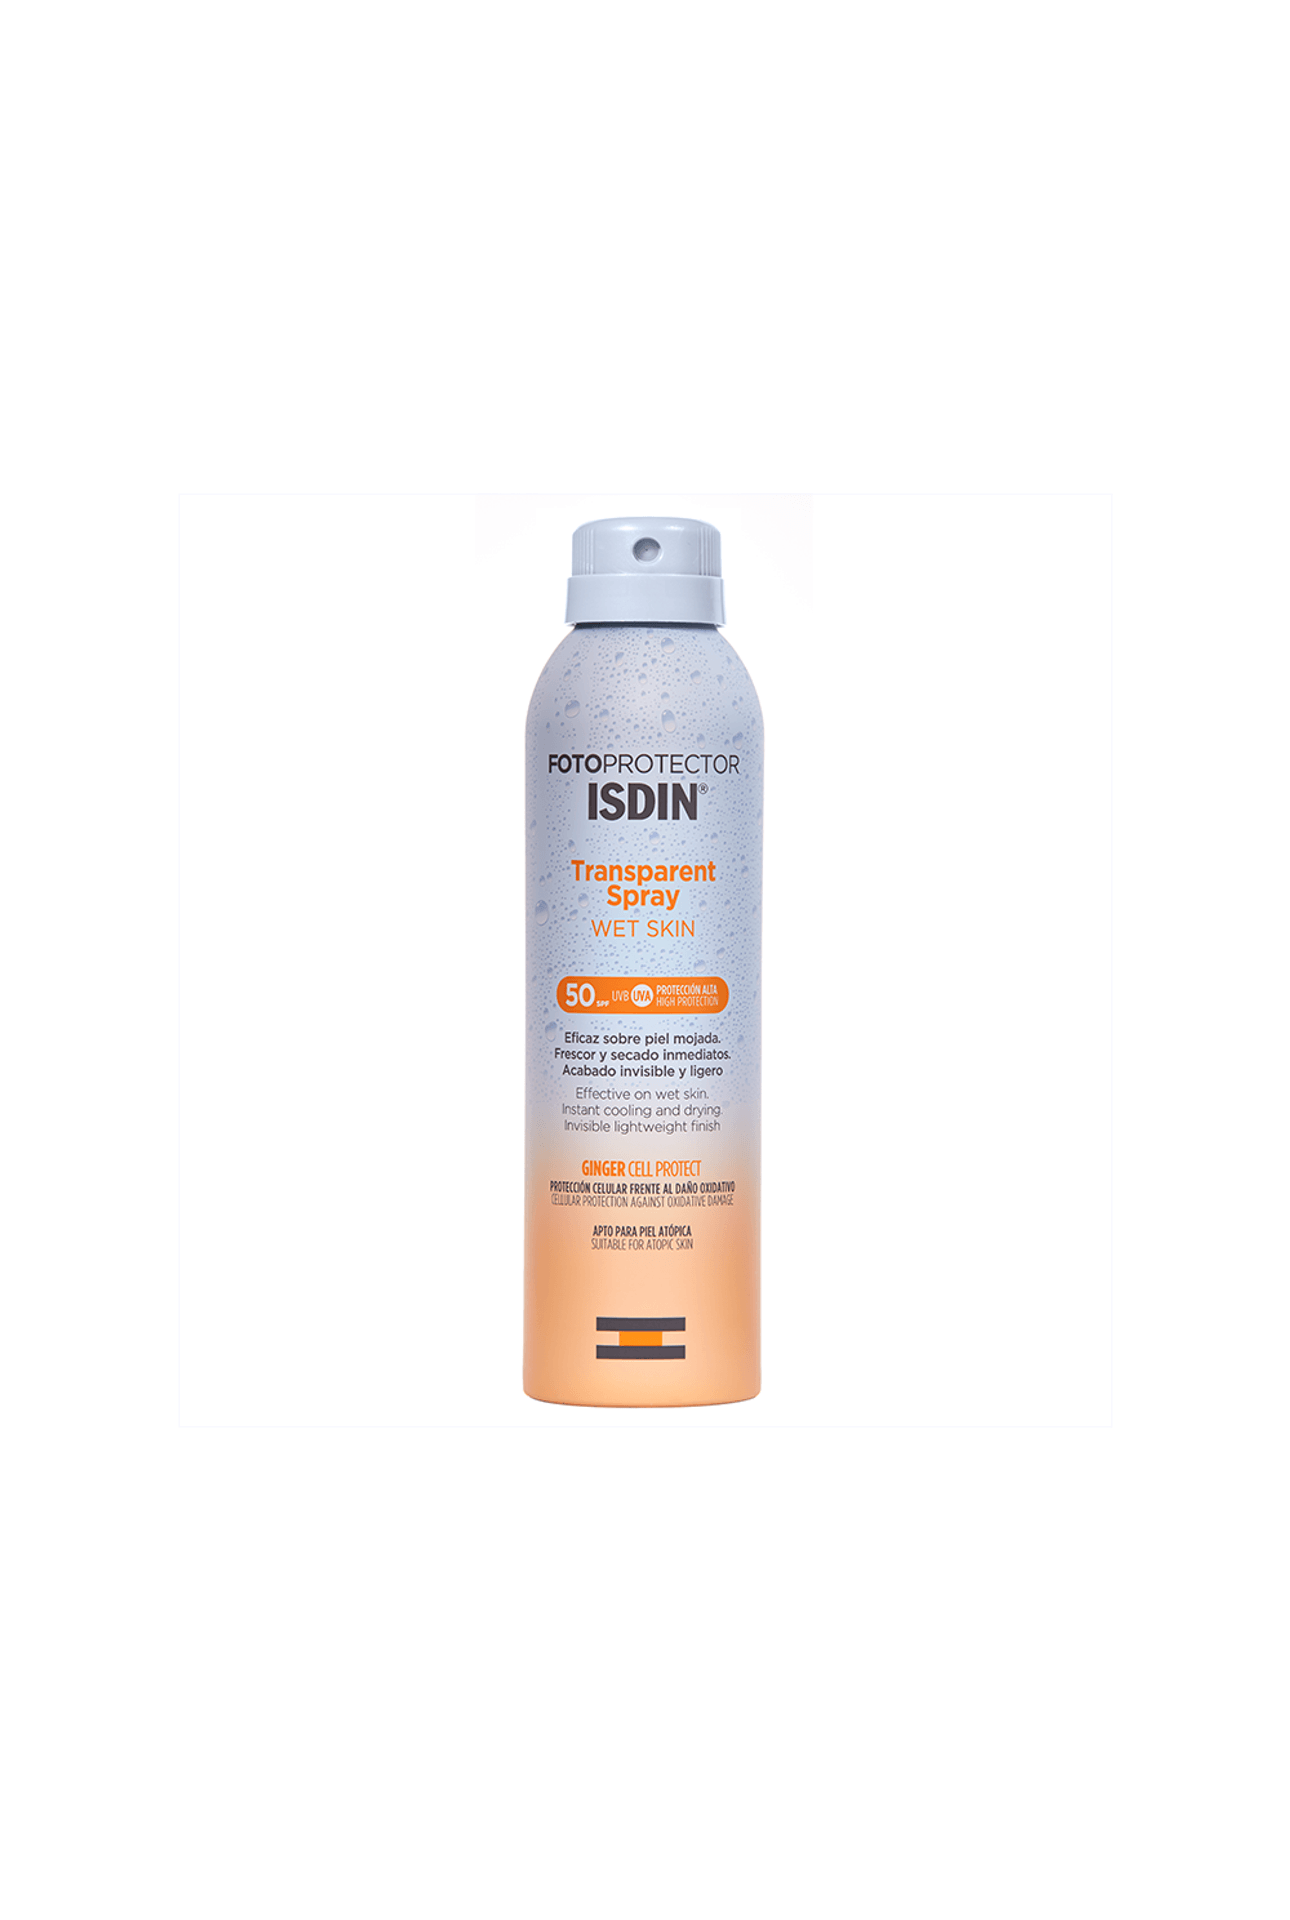 Isdin-Fotoprotector Wet Skin Spray Transparente Fps 50 x 250 ml-8429420187917